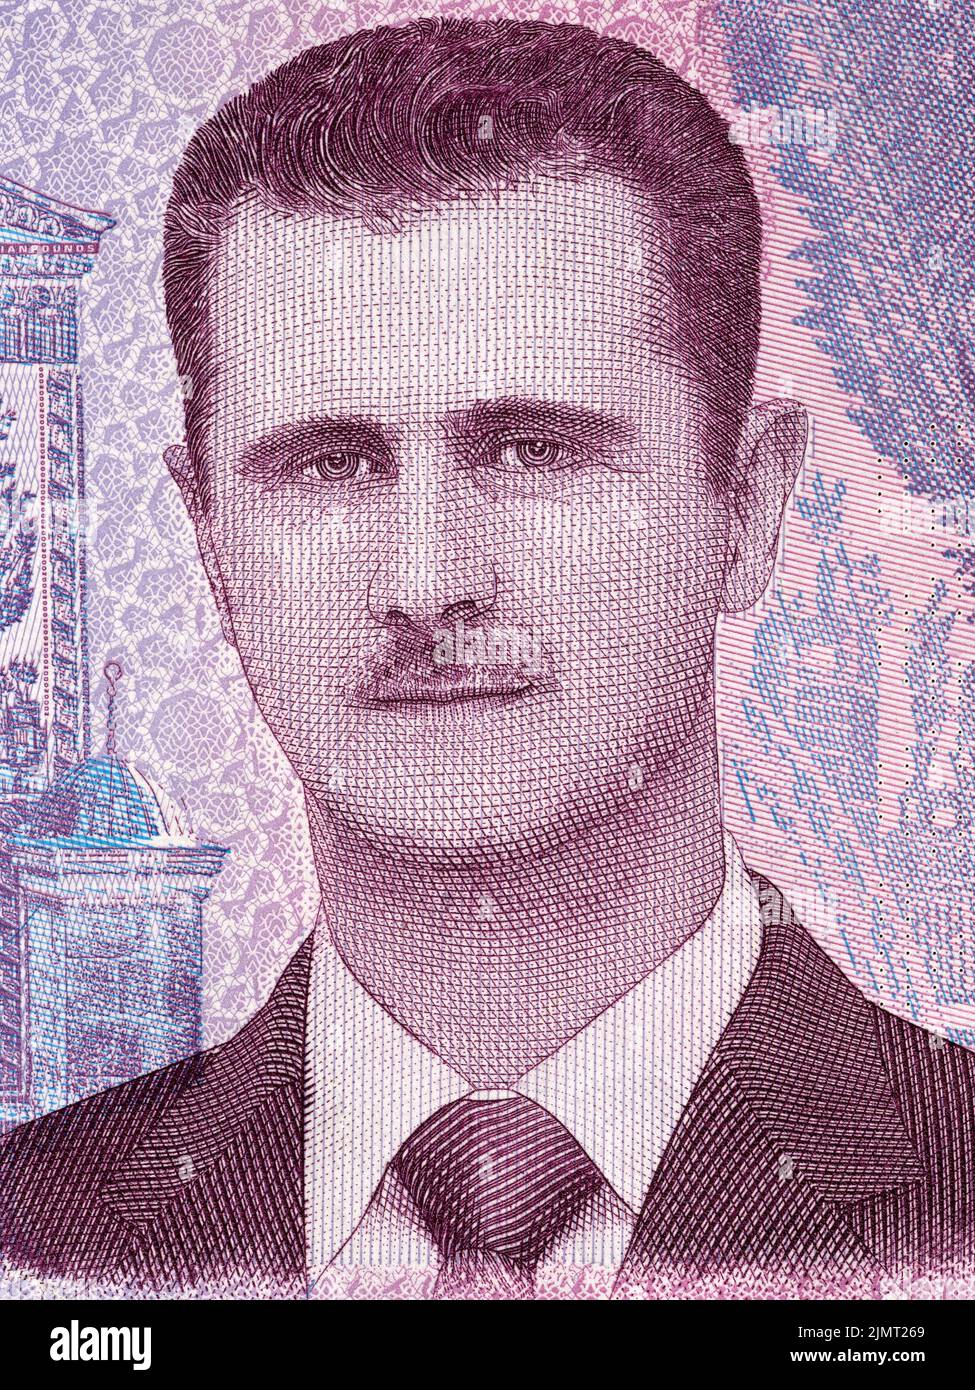 Bashar al-Assad portrait from Syrian money Stock Photo